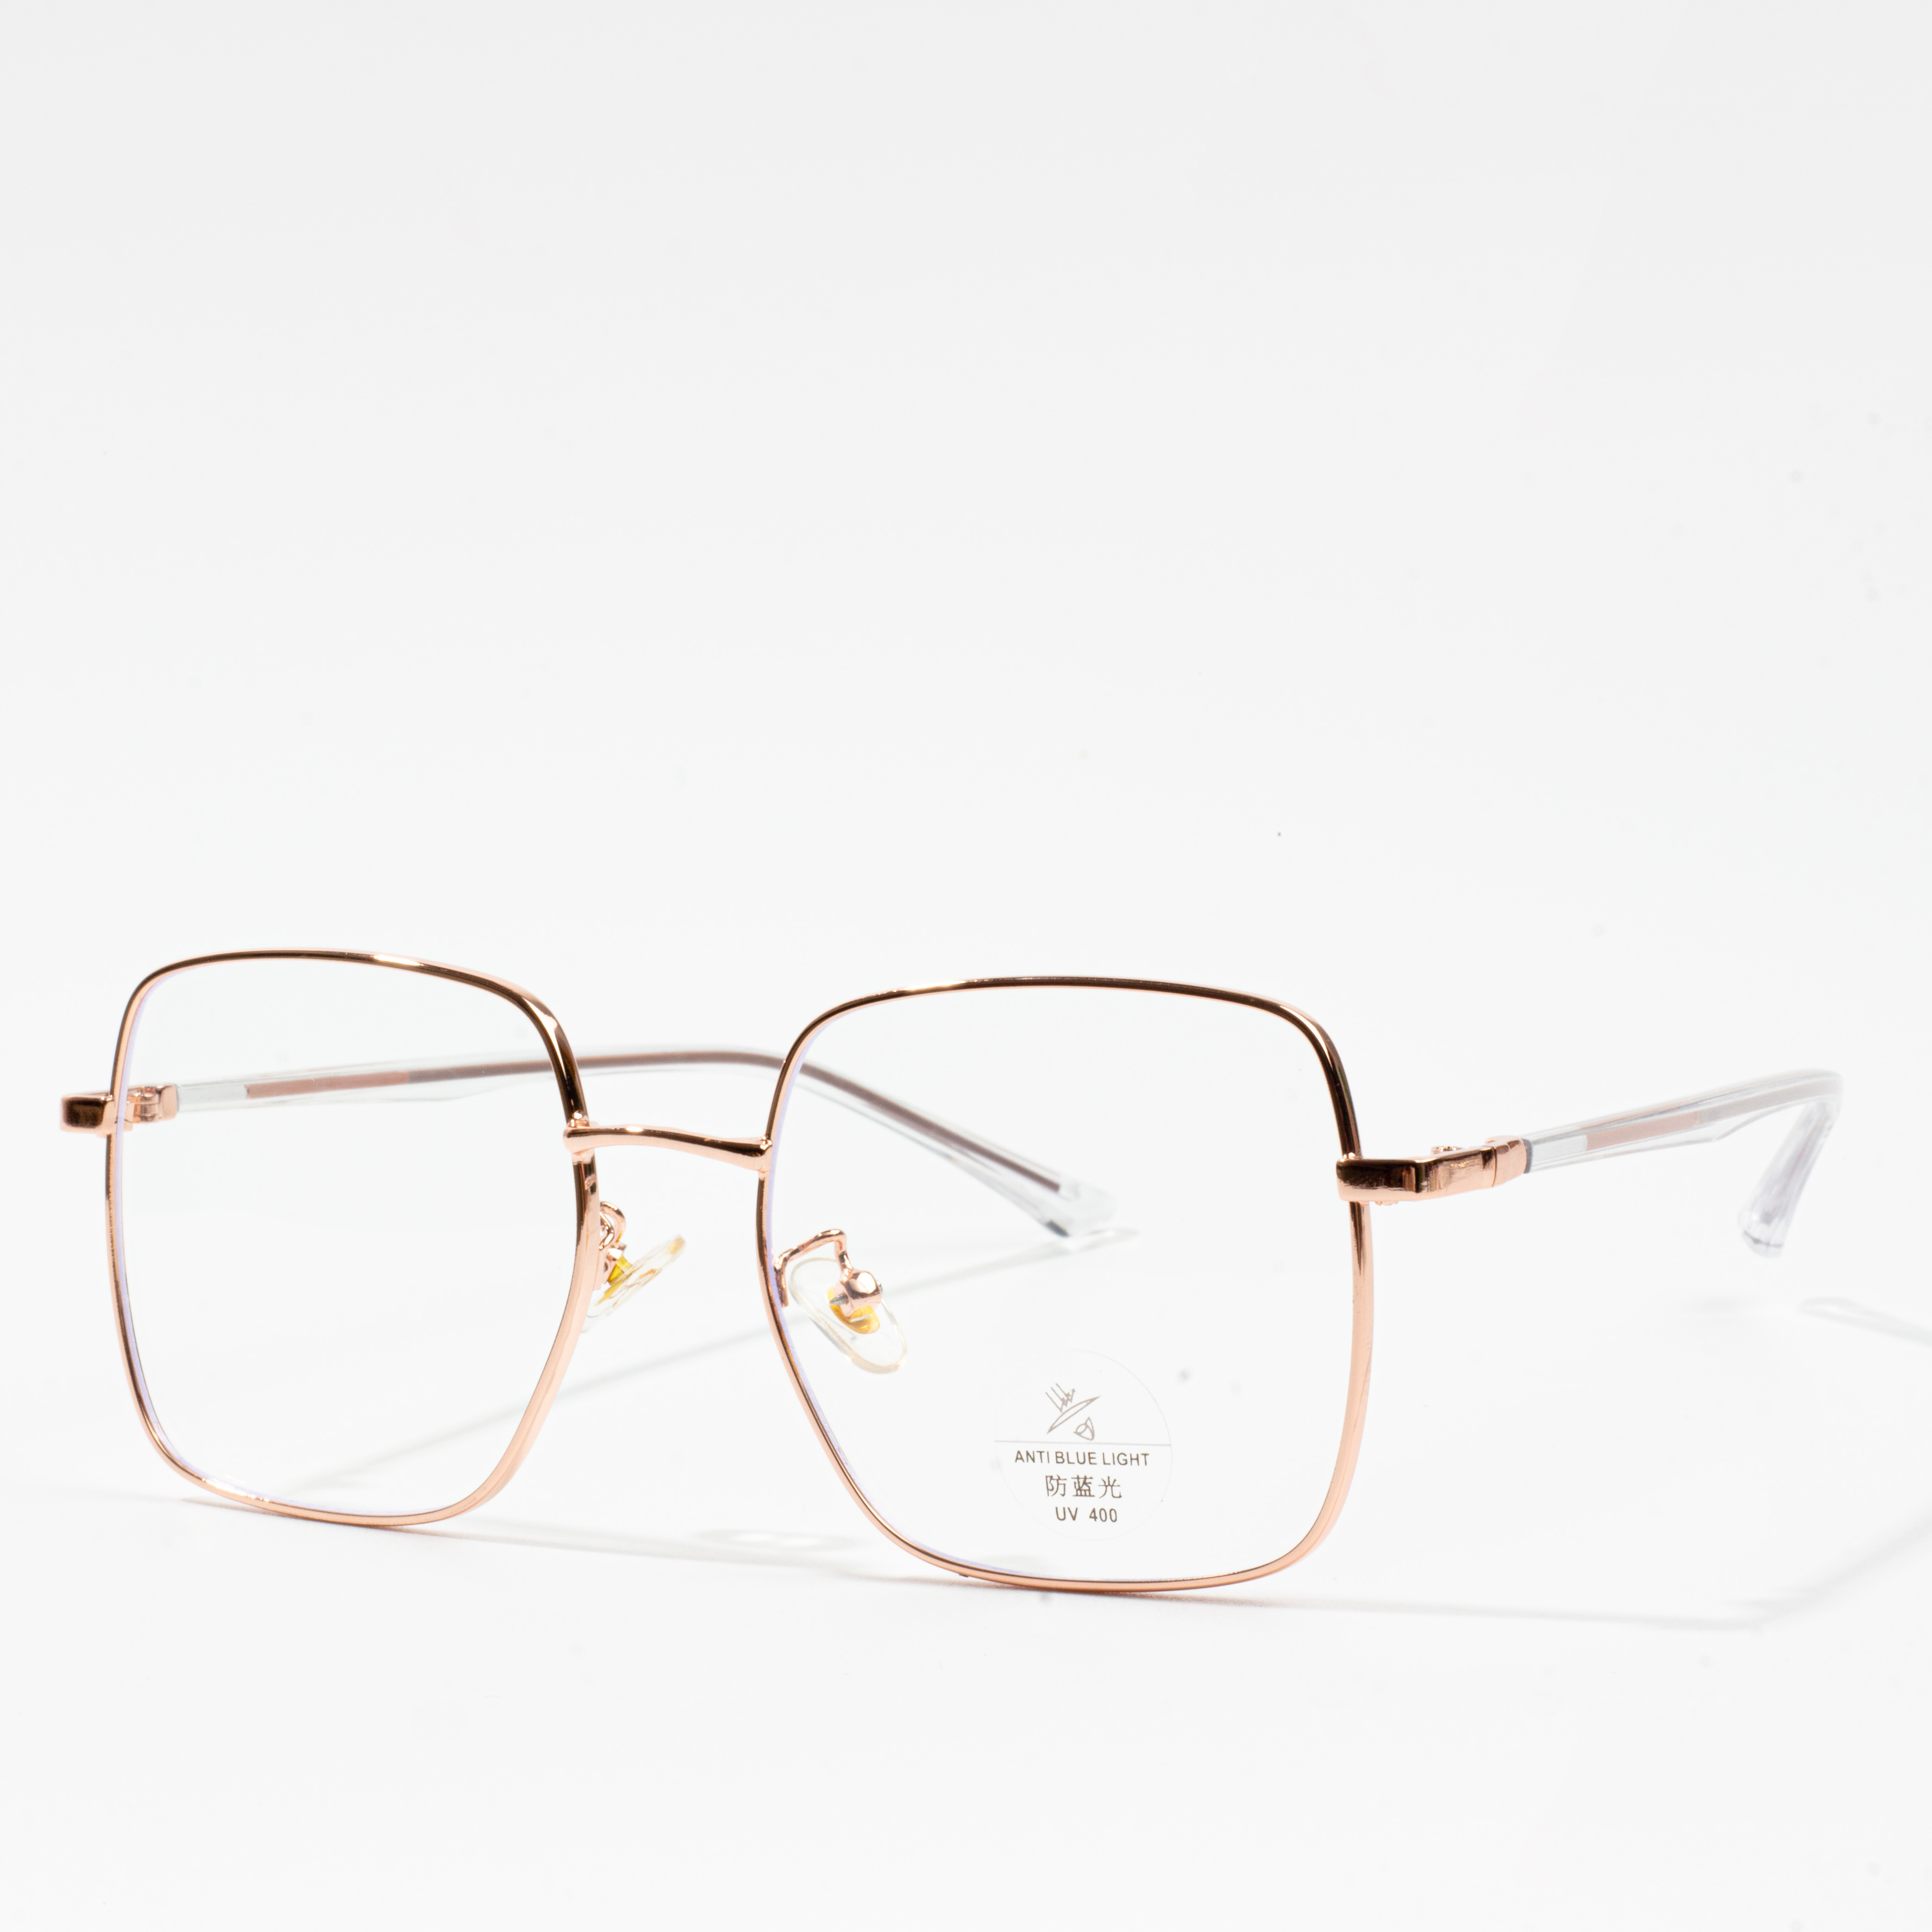 seiko eyeglass frames